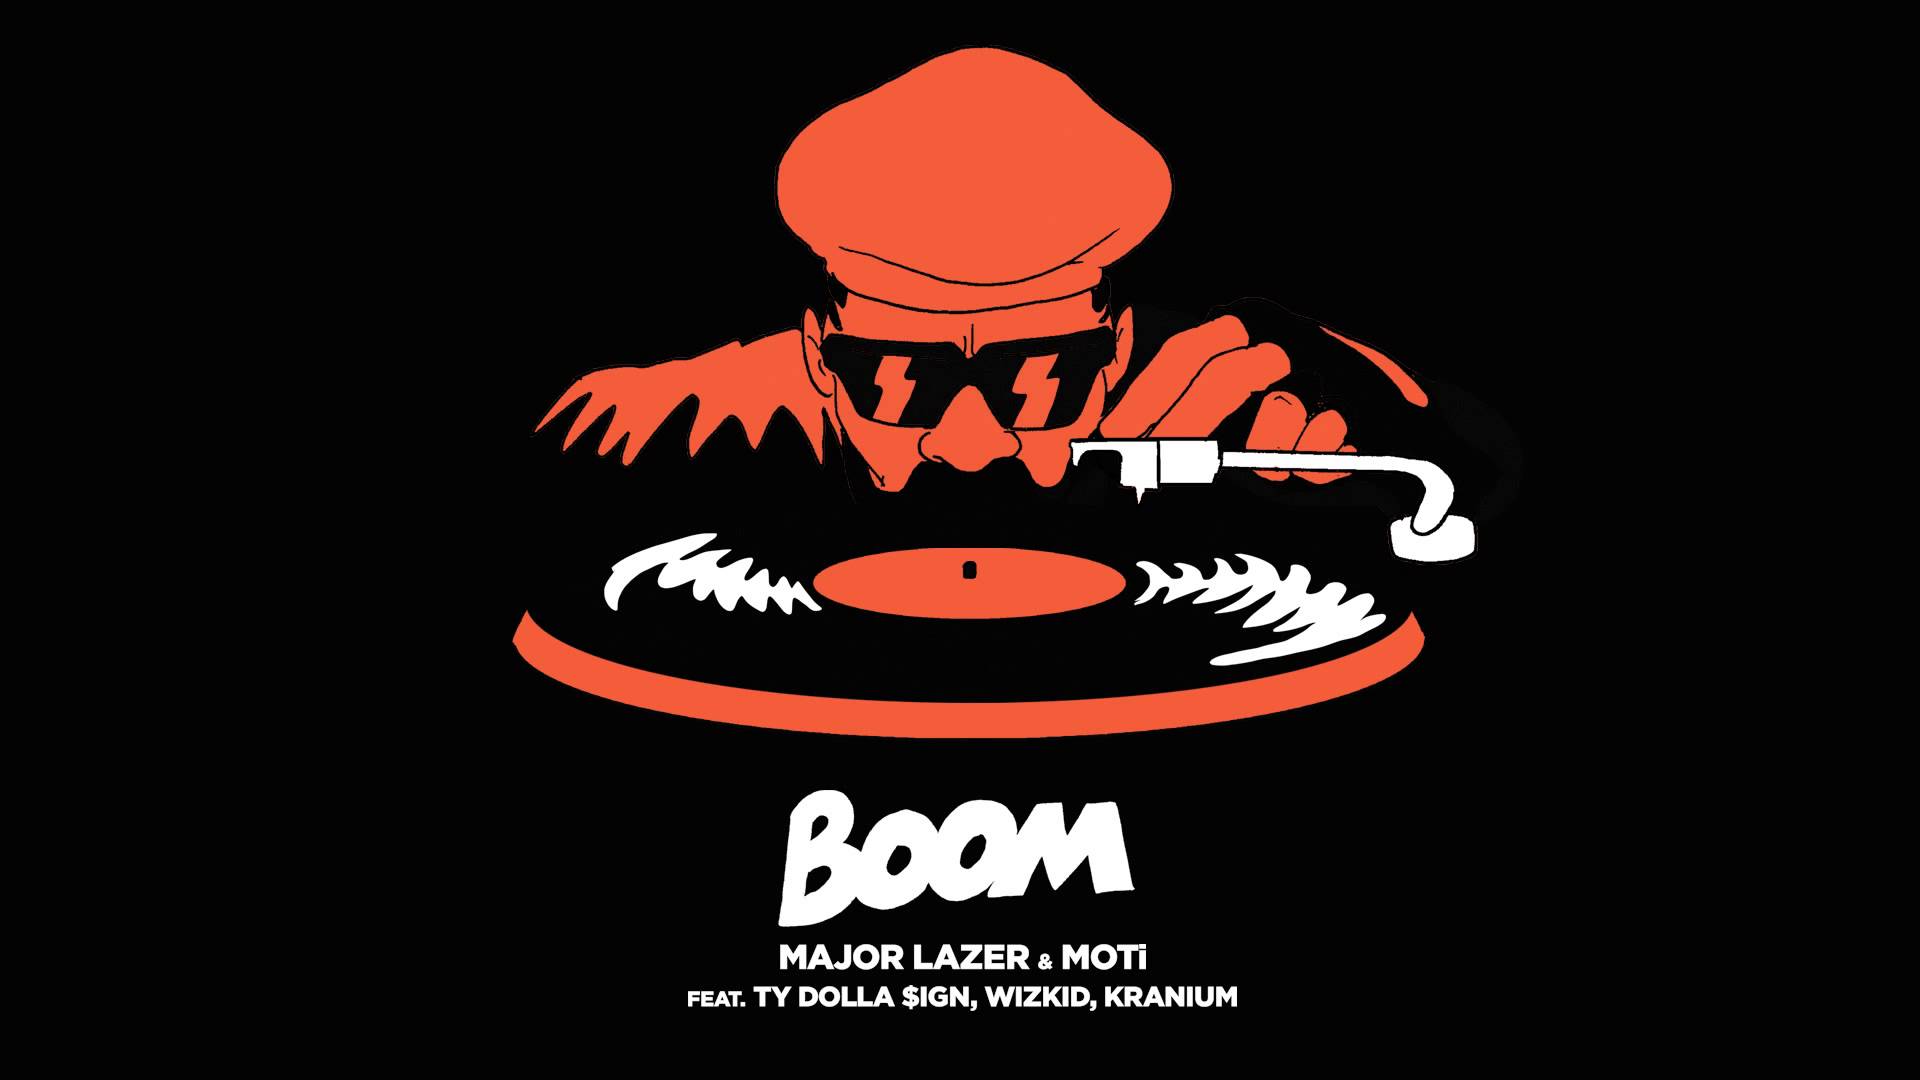 Major Lazer - Boom